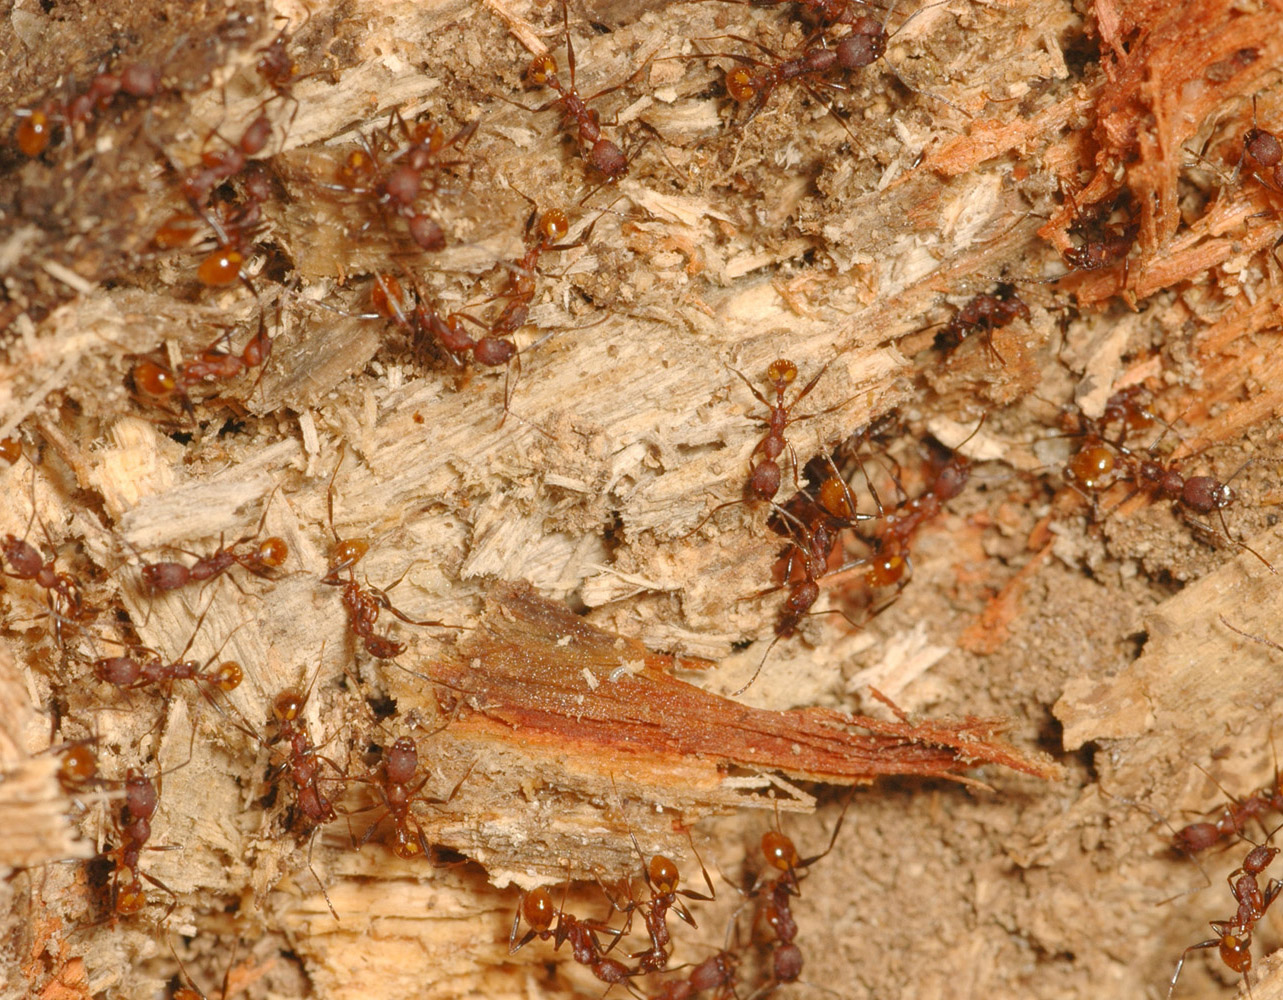 Aphaenogaster lamellidens colony